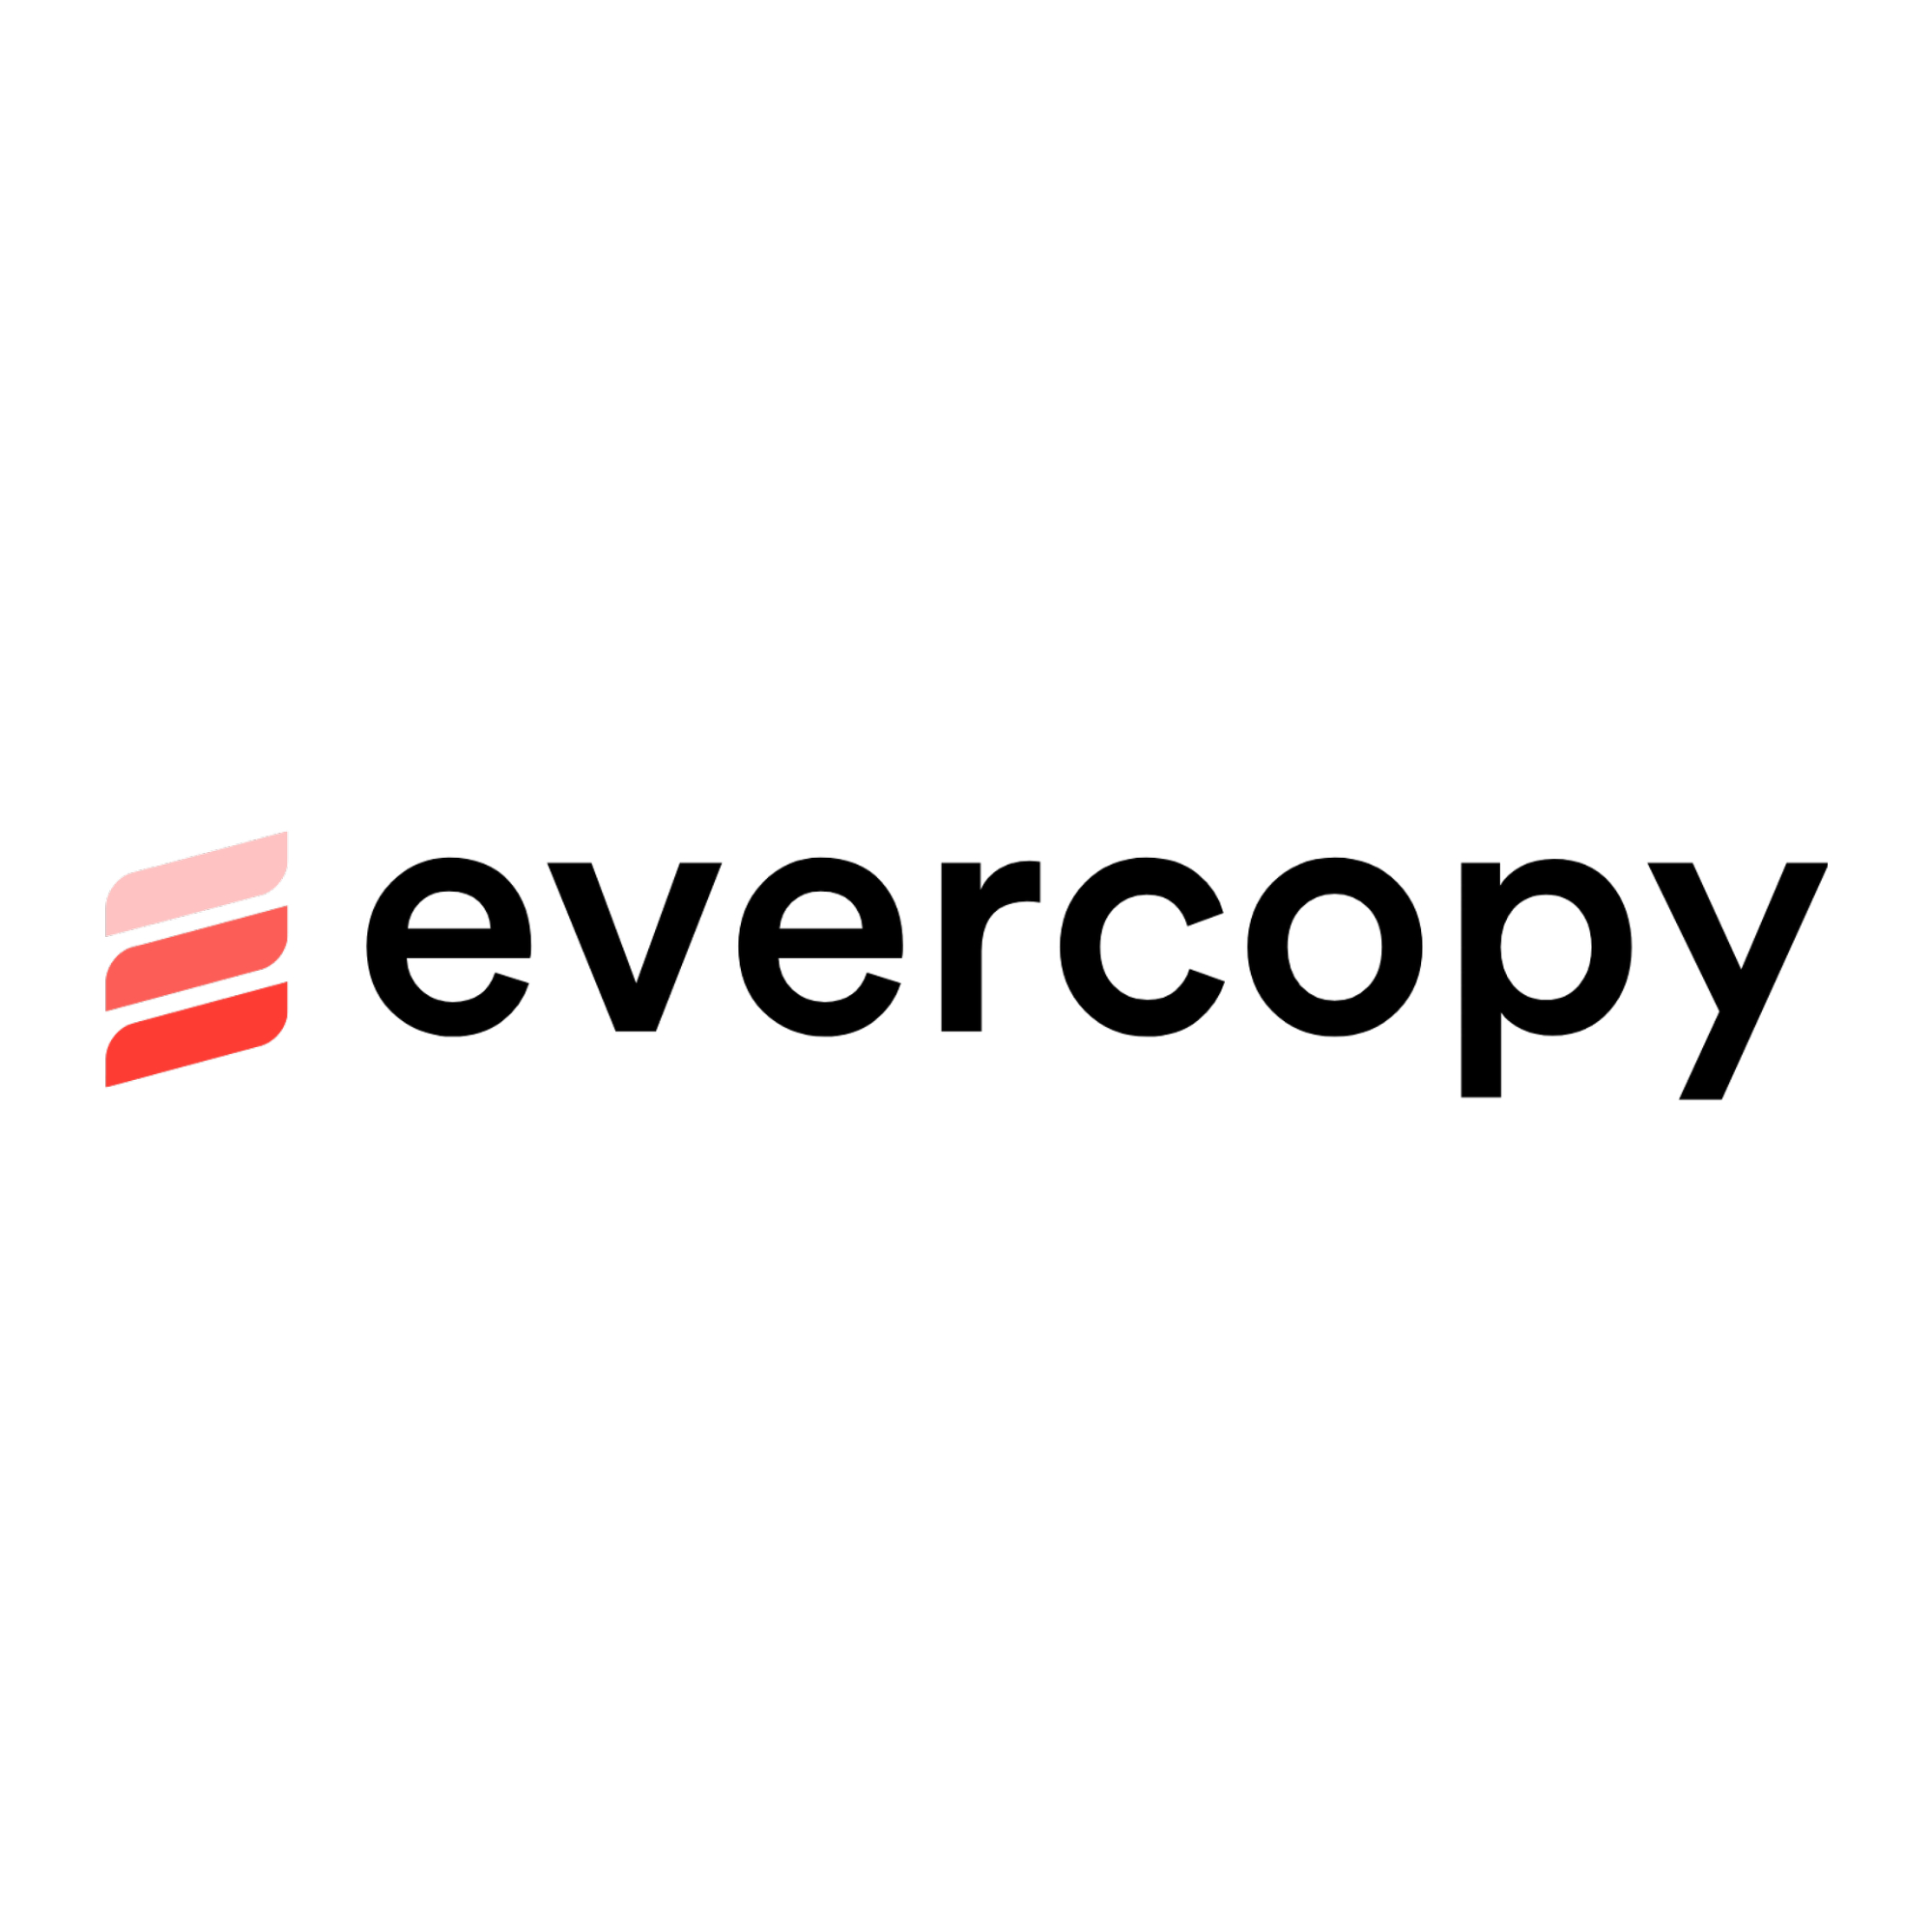 Evercopy